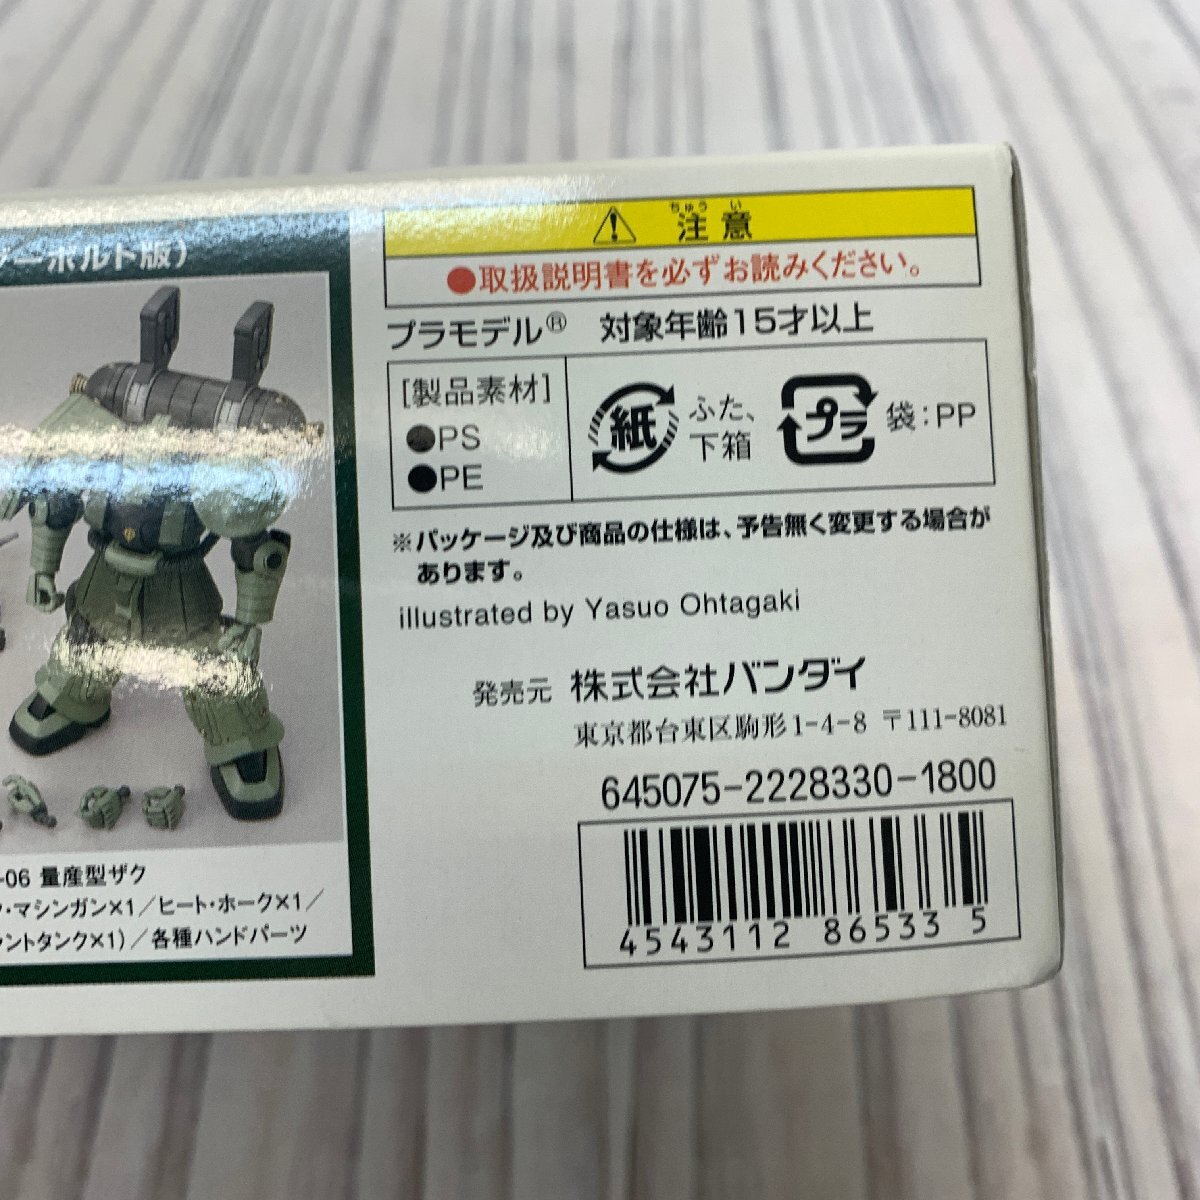 s001 O2 not yet constructed Gundam plastic model HG 1/144 mass production type The k Gundam Thunderbolt version gun pra storage goods 